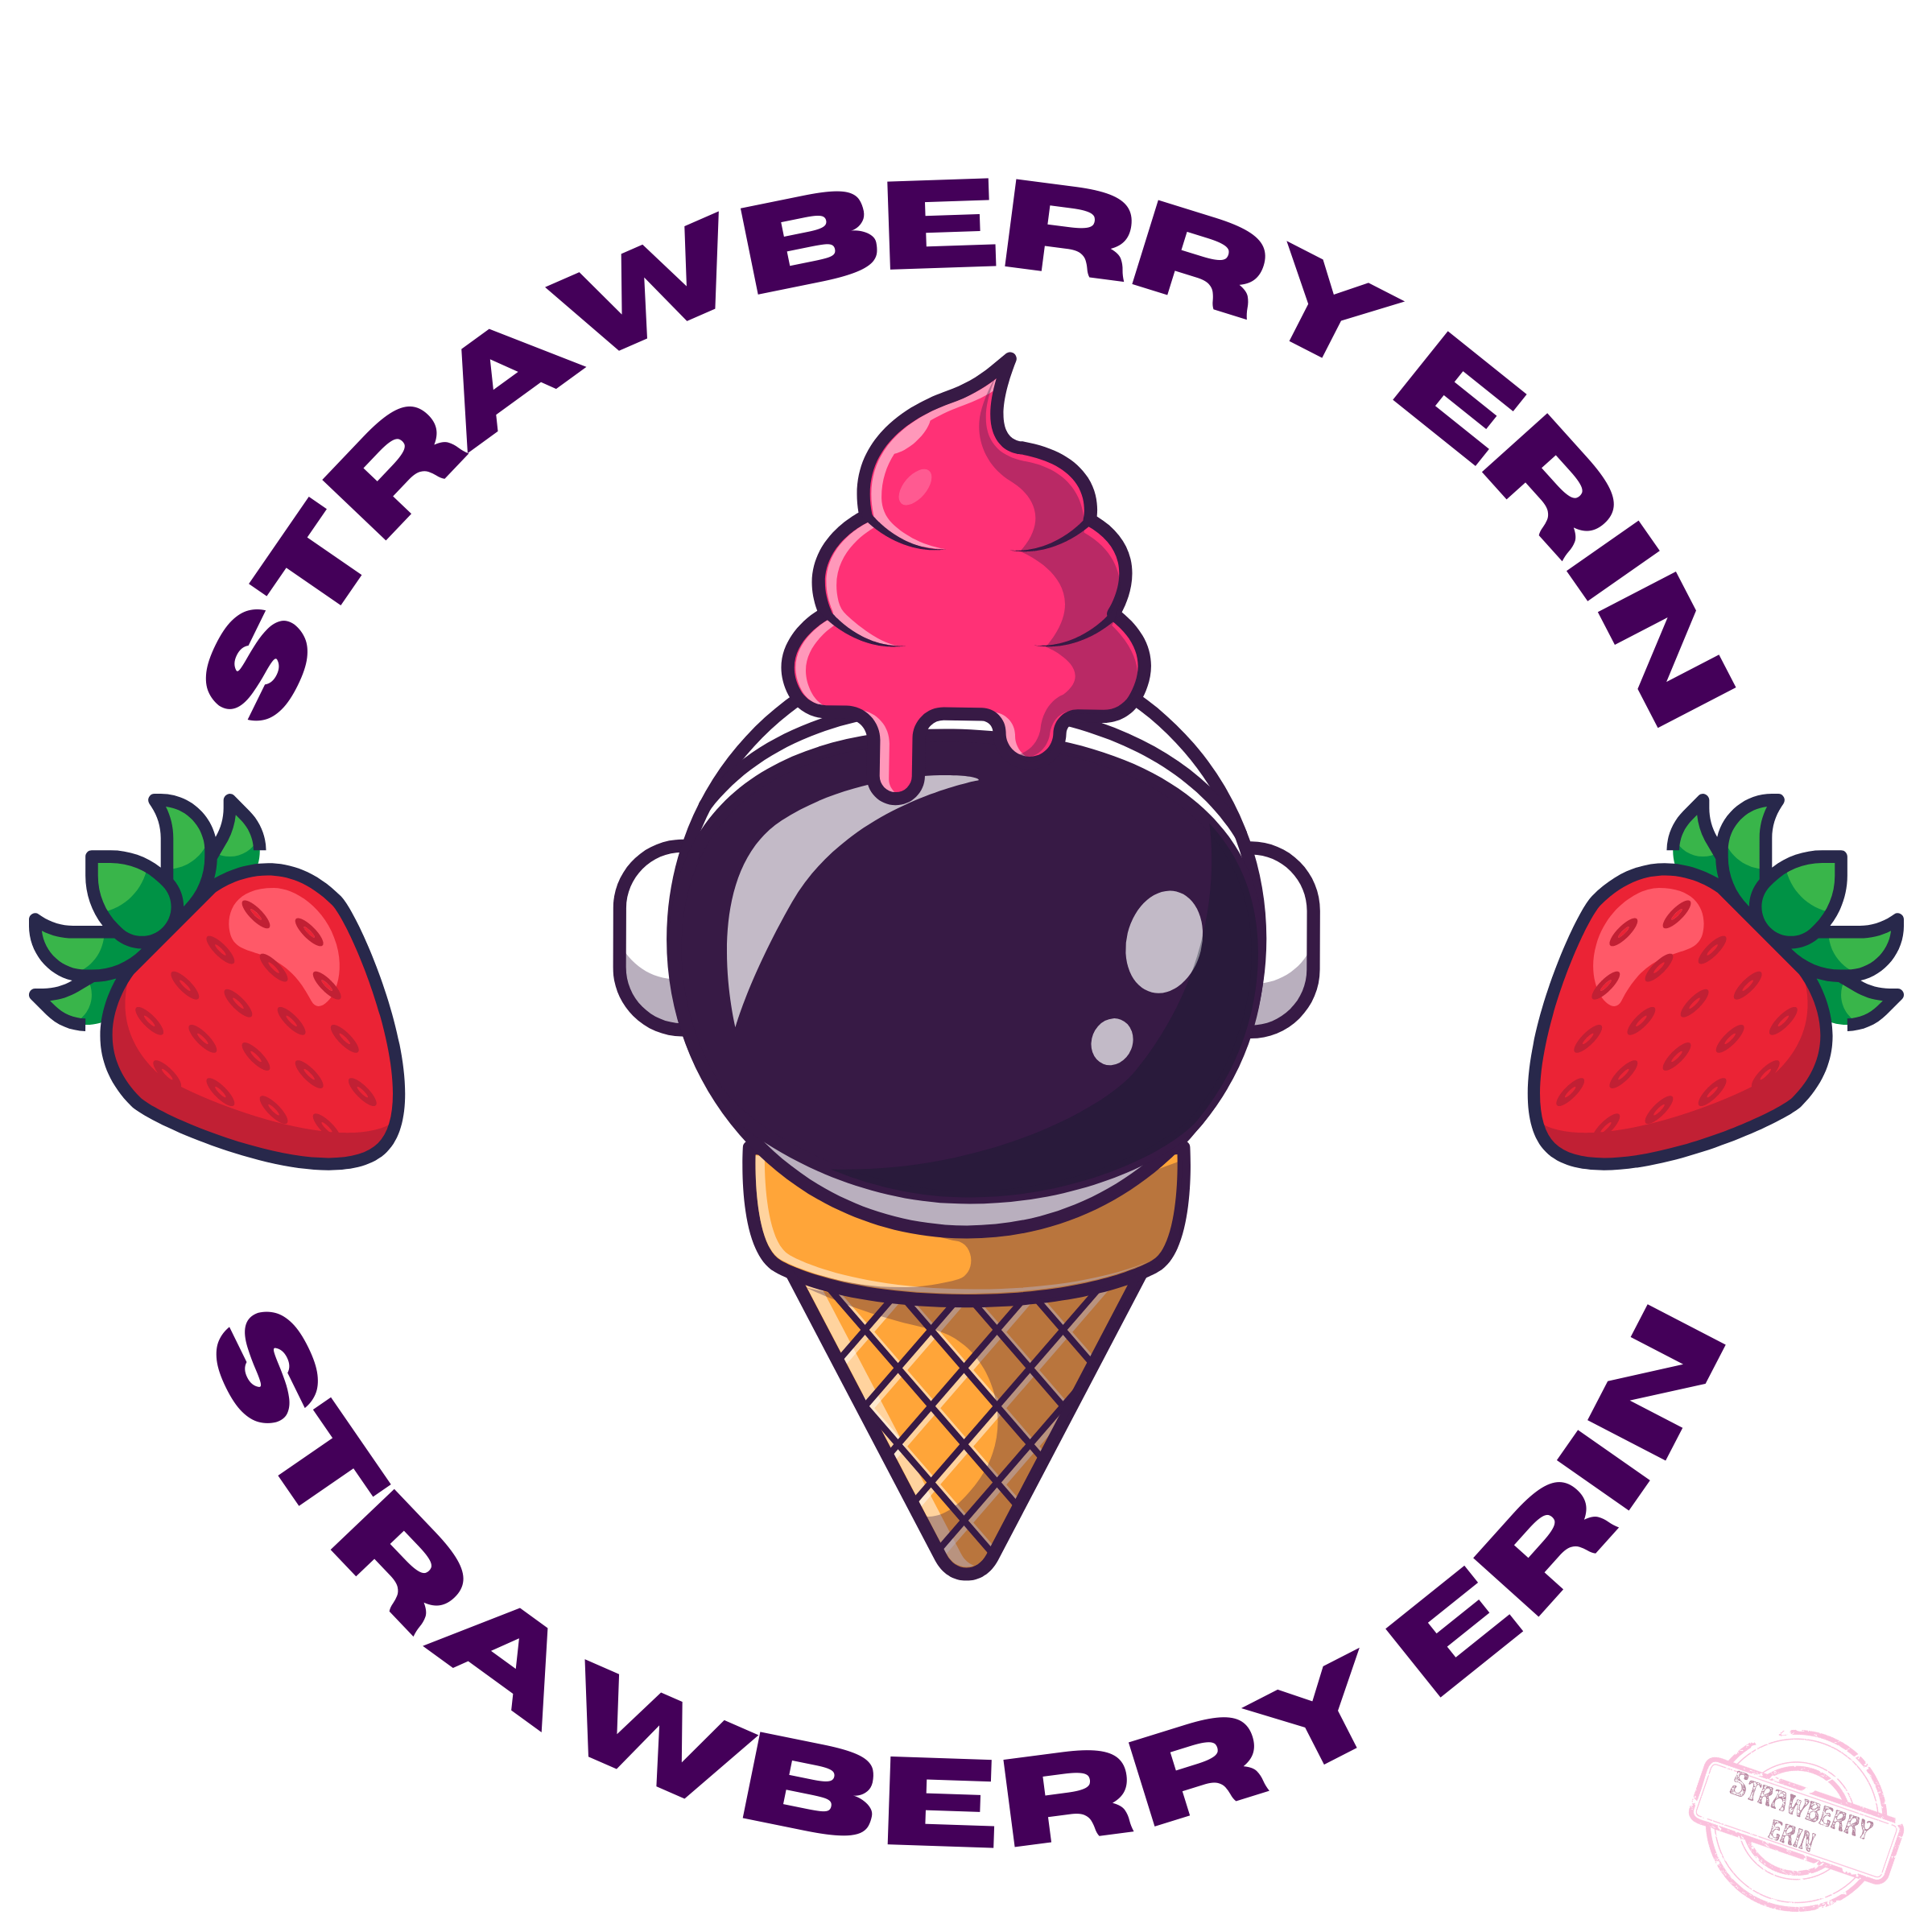 Strawberry Erin Logos by Erin Adams on Dribbble